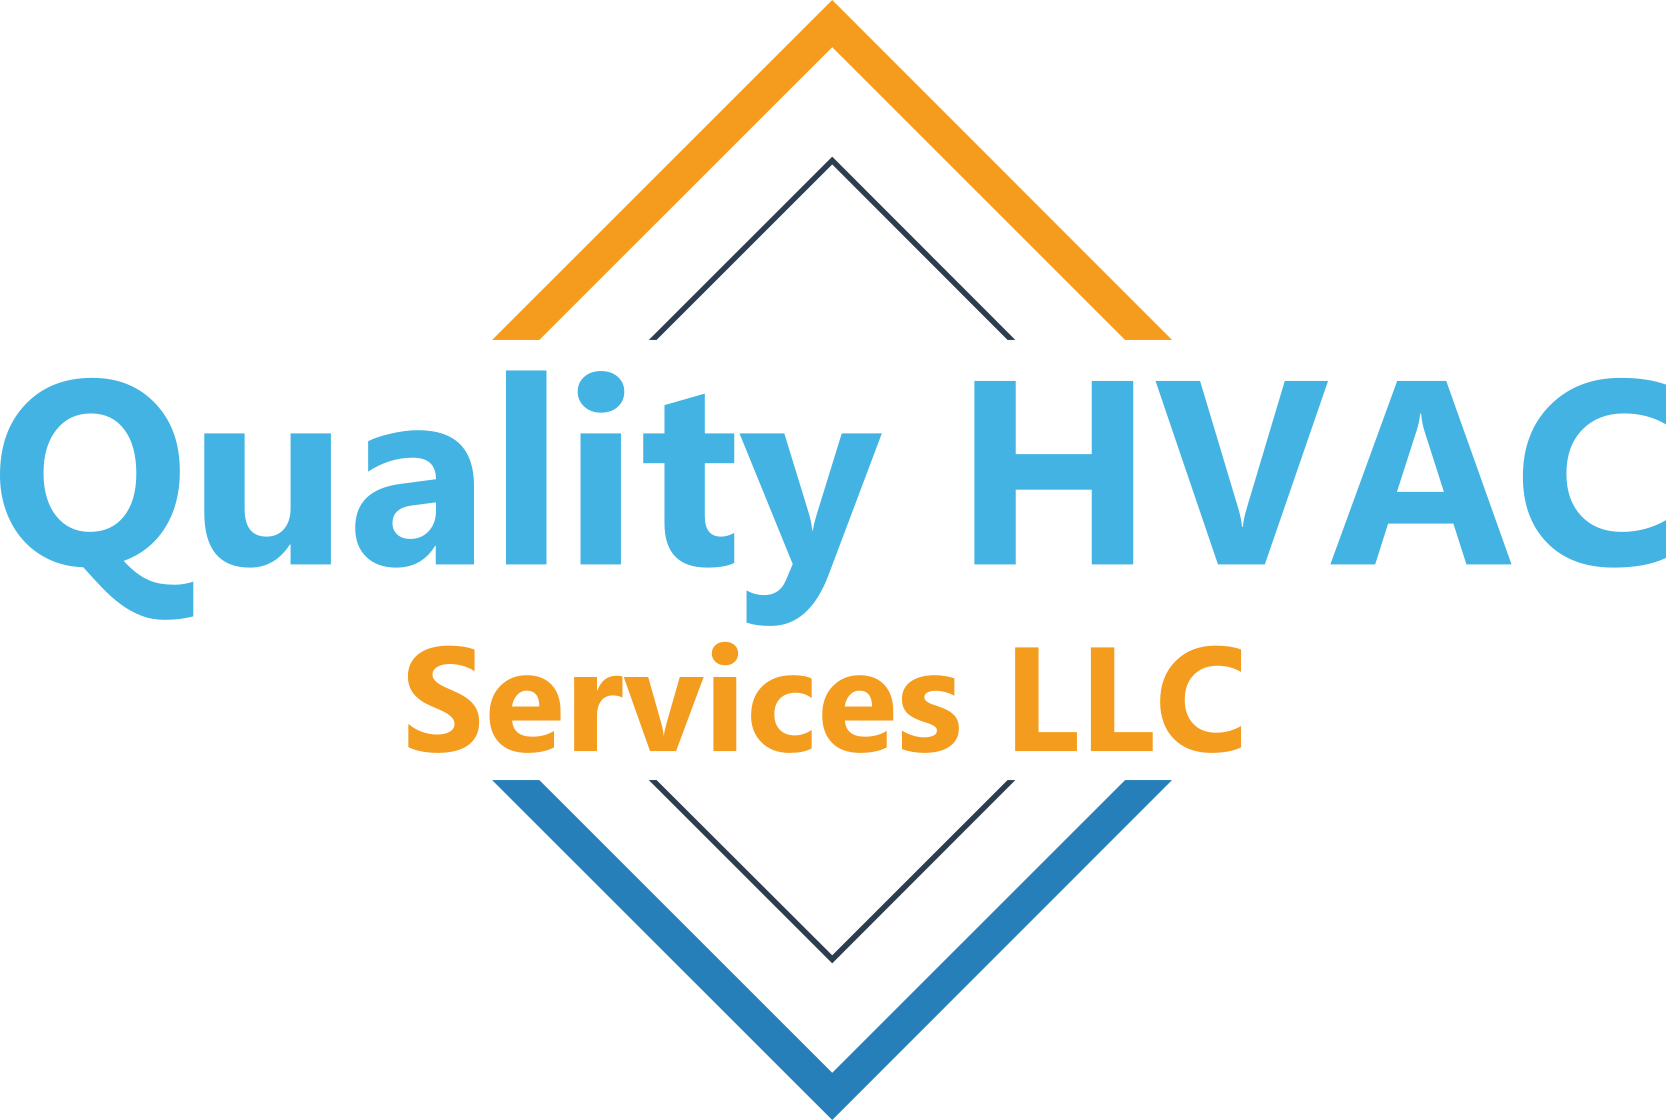 Quality HVAC Services LLC Logo